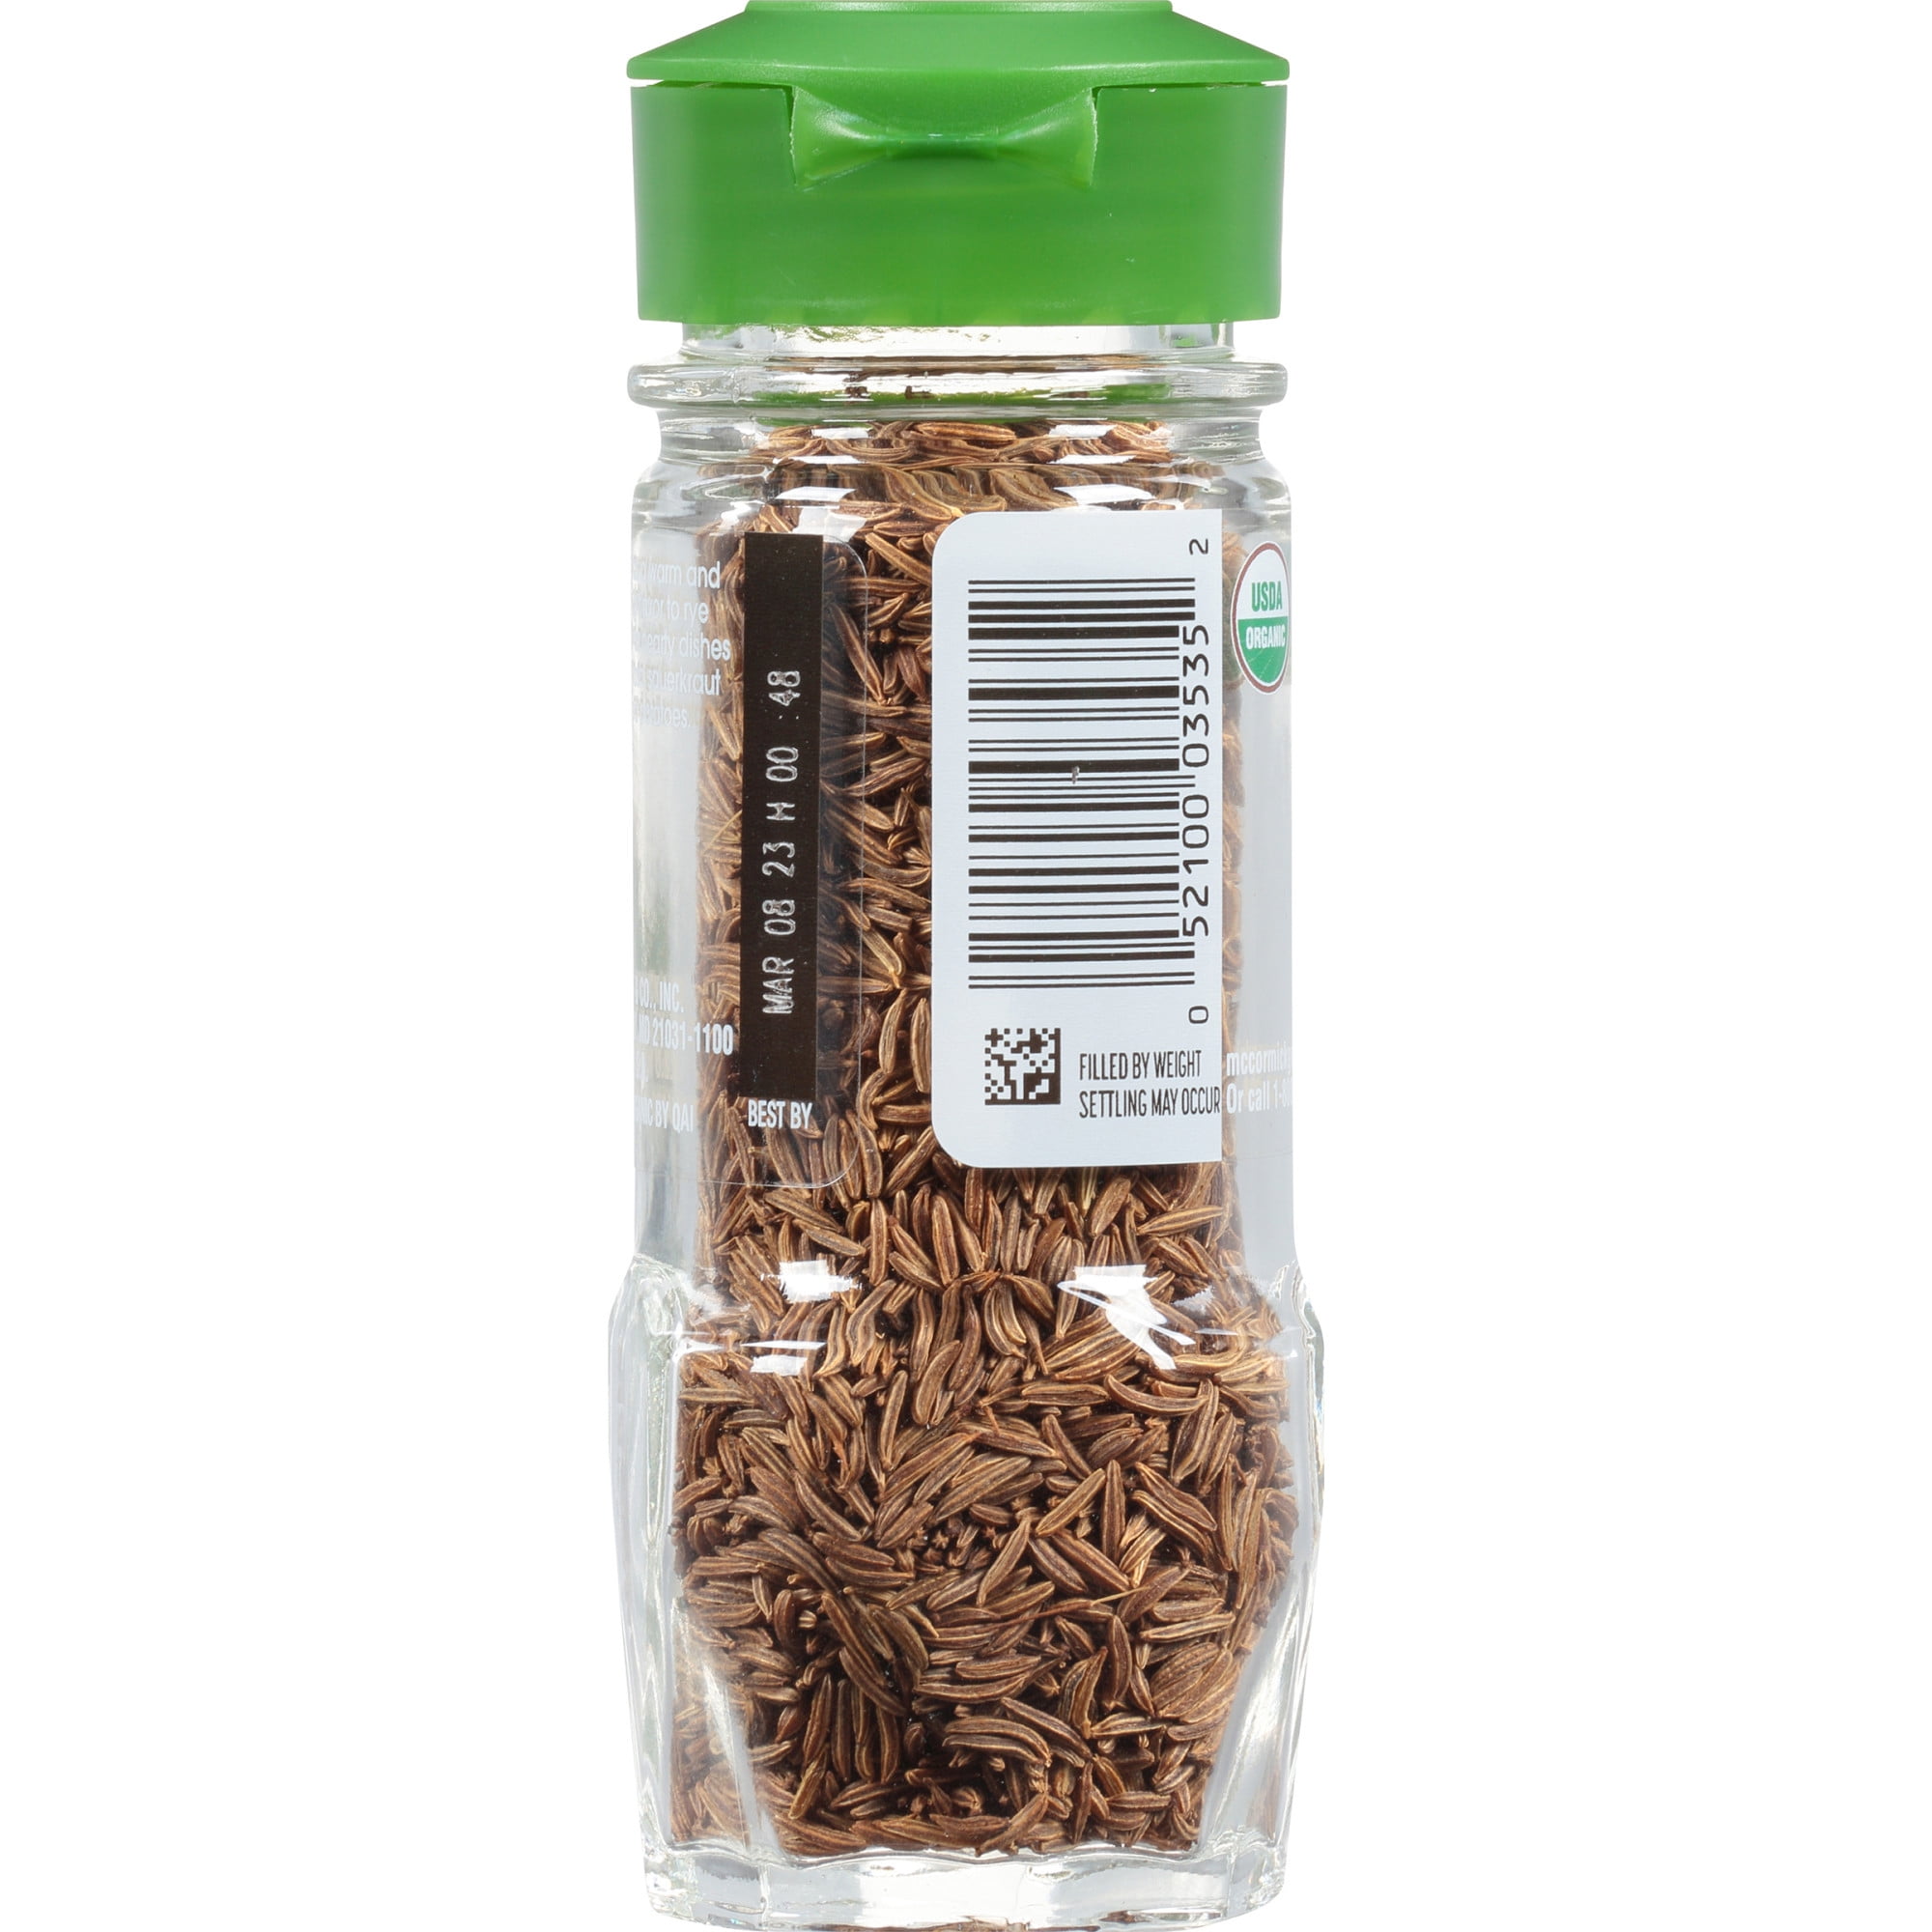 Regal Caraway Seed - 5 lb.